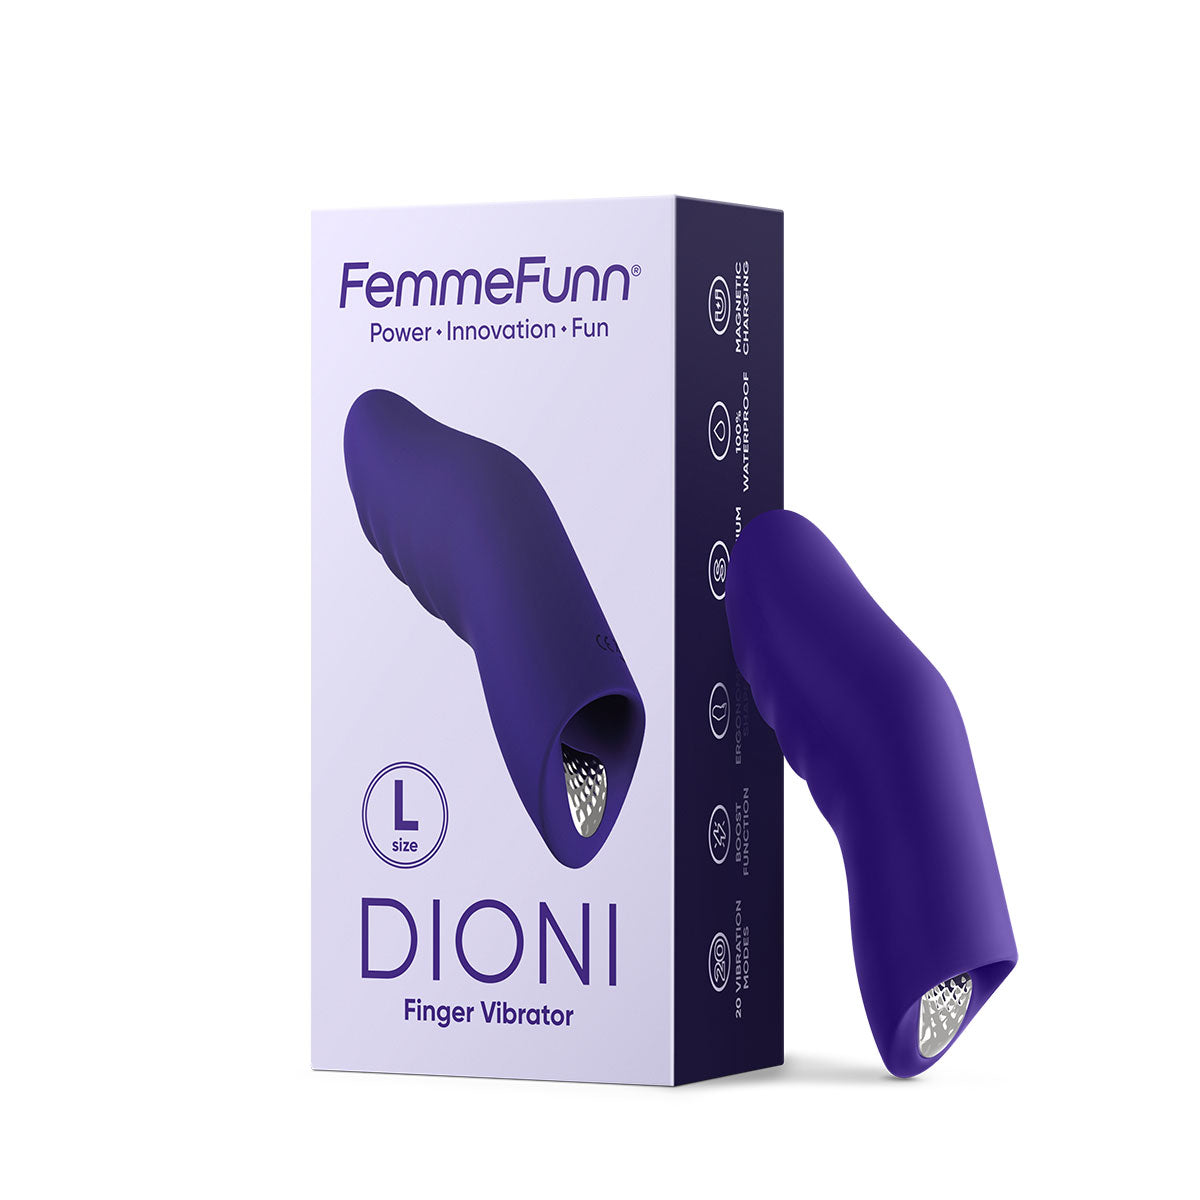 Dioni Finger Vibrator by Vvole: Electrifying Pleasure